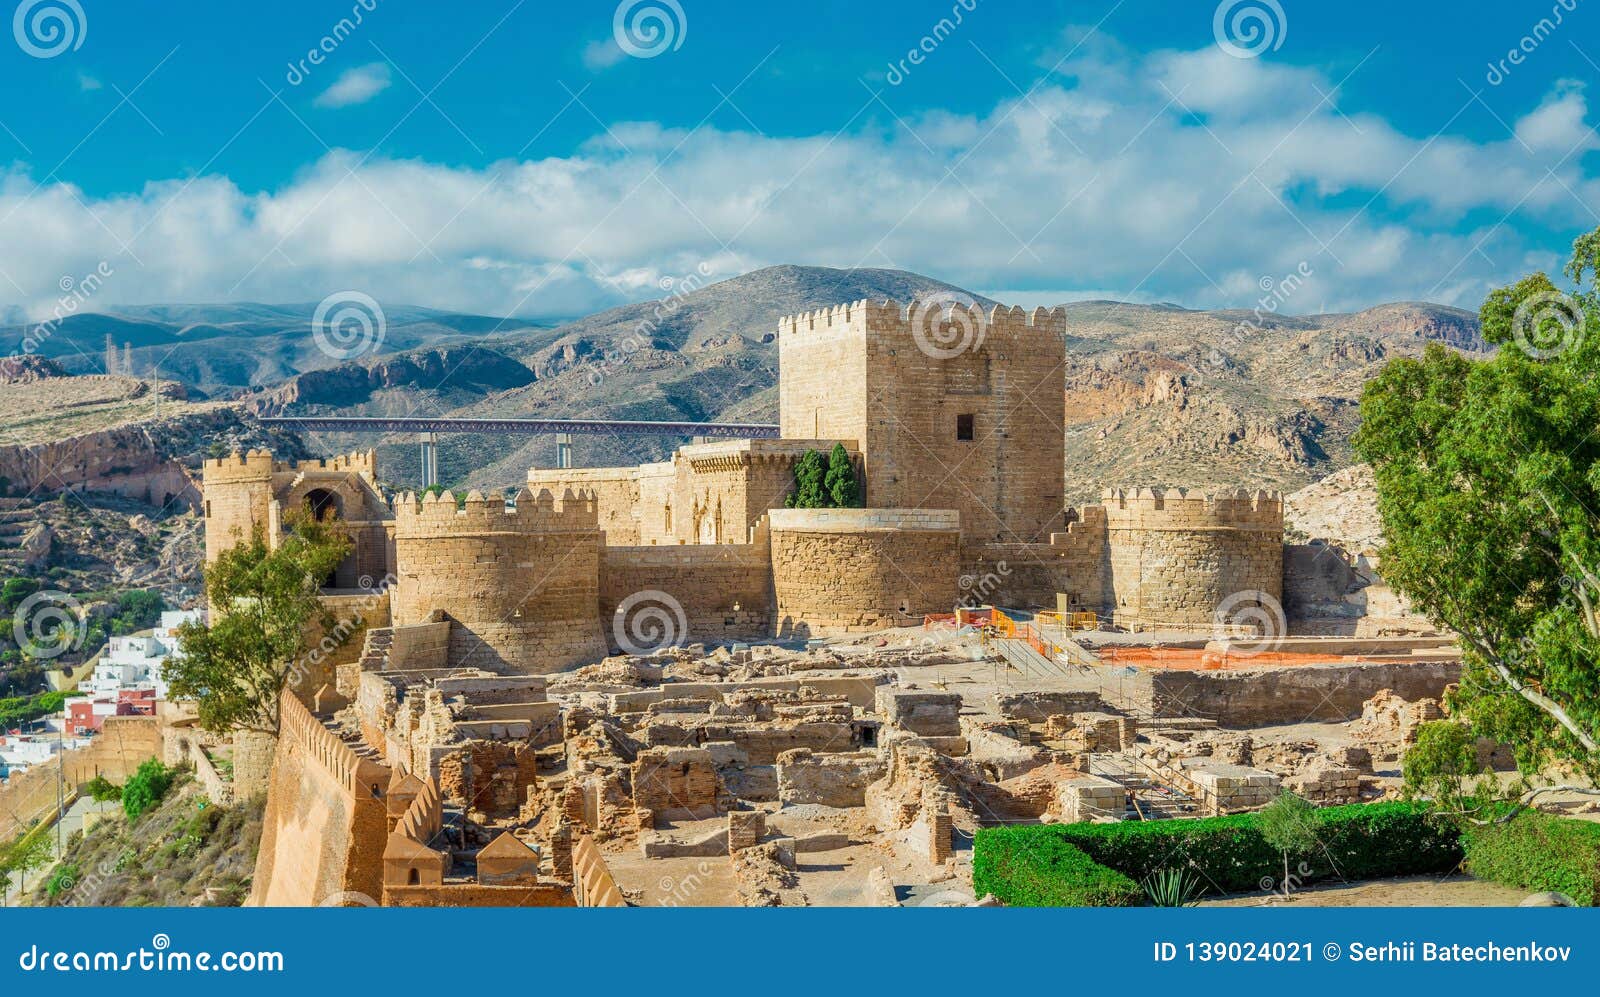 medieval castle alcazaba of almeria, travel sites in andalusia